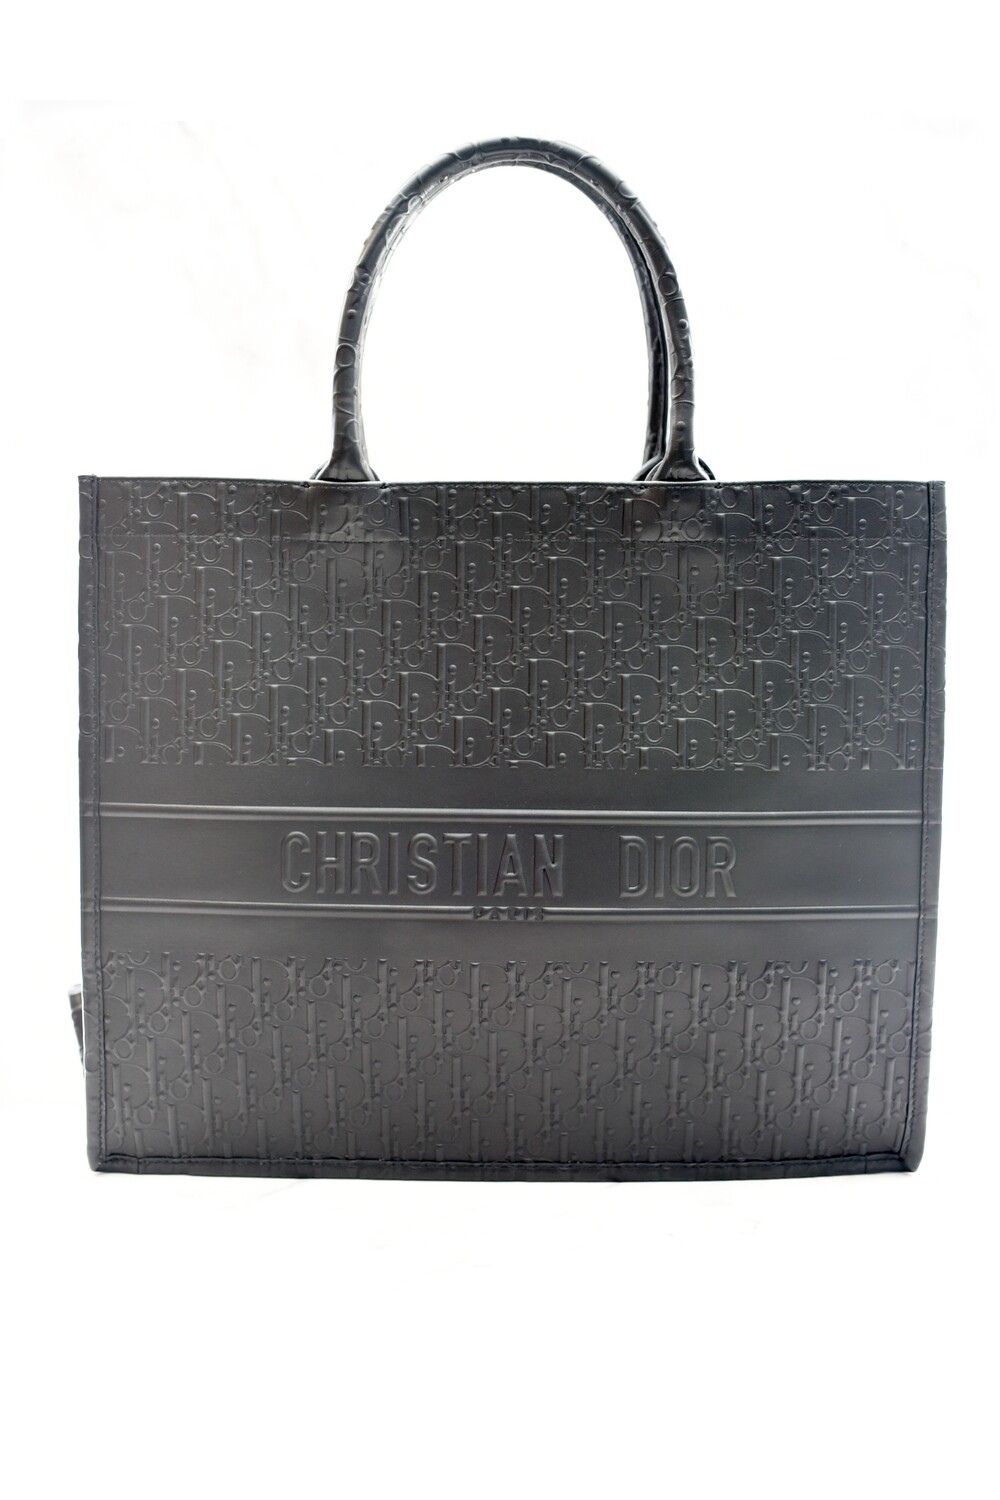 Christian Dior Book Tote, Black Dior Oblique Embossed Calfskin, Medium, New in Dustbag GA001